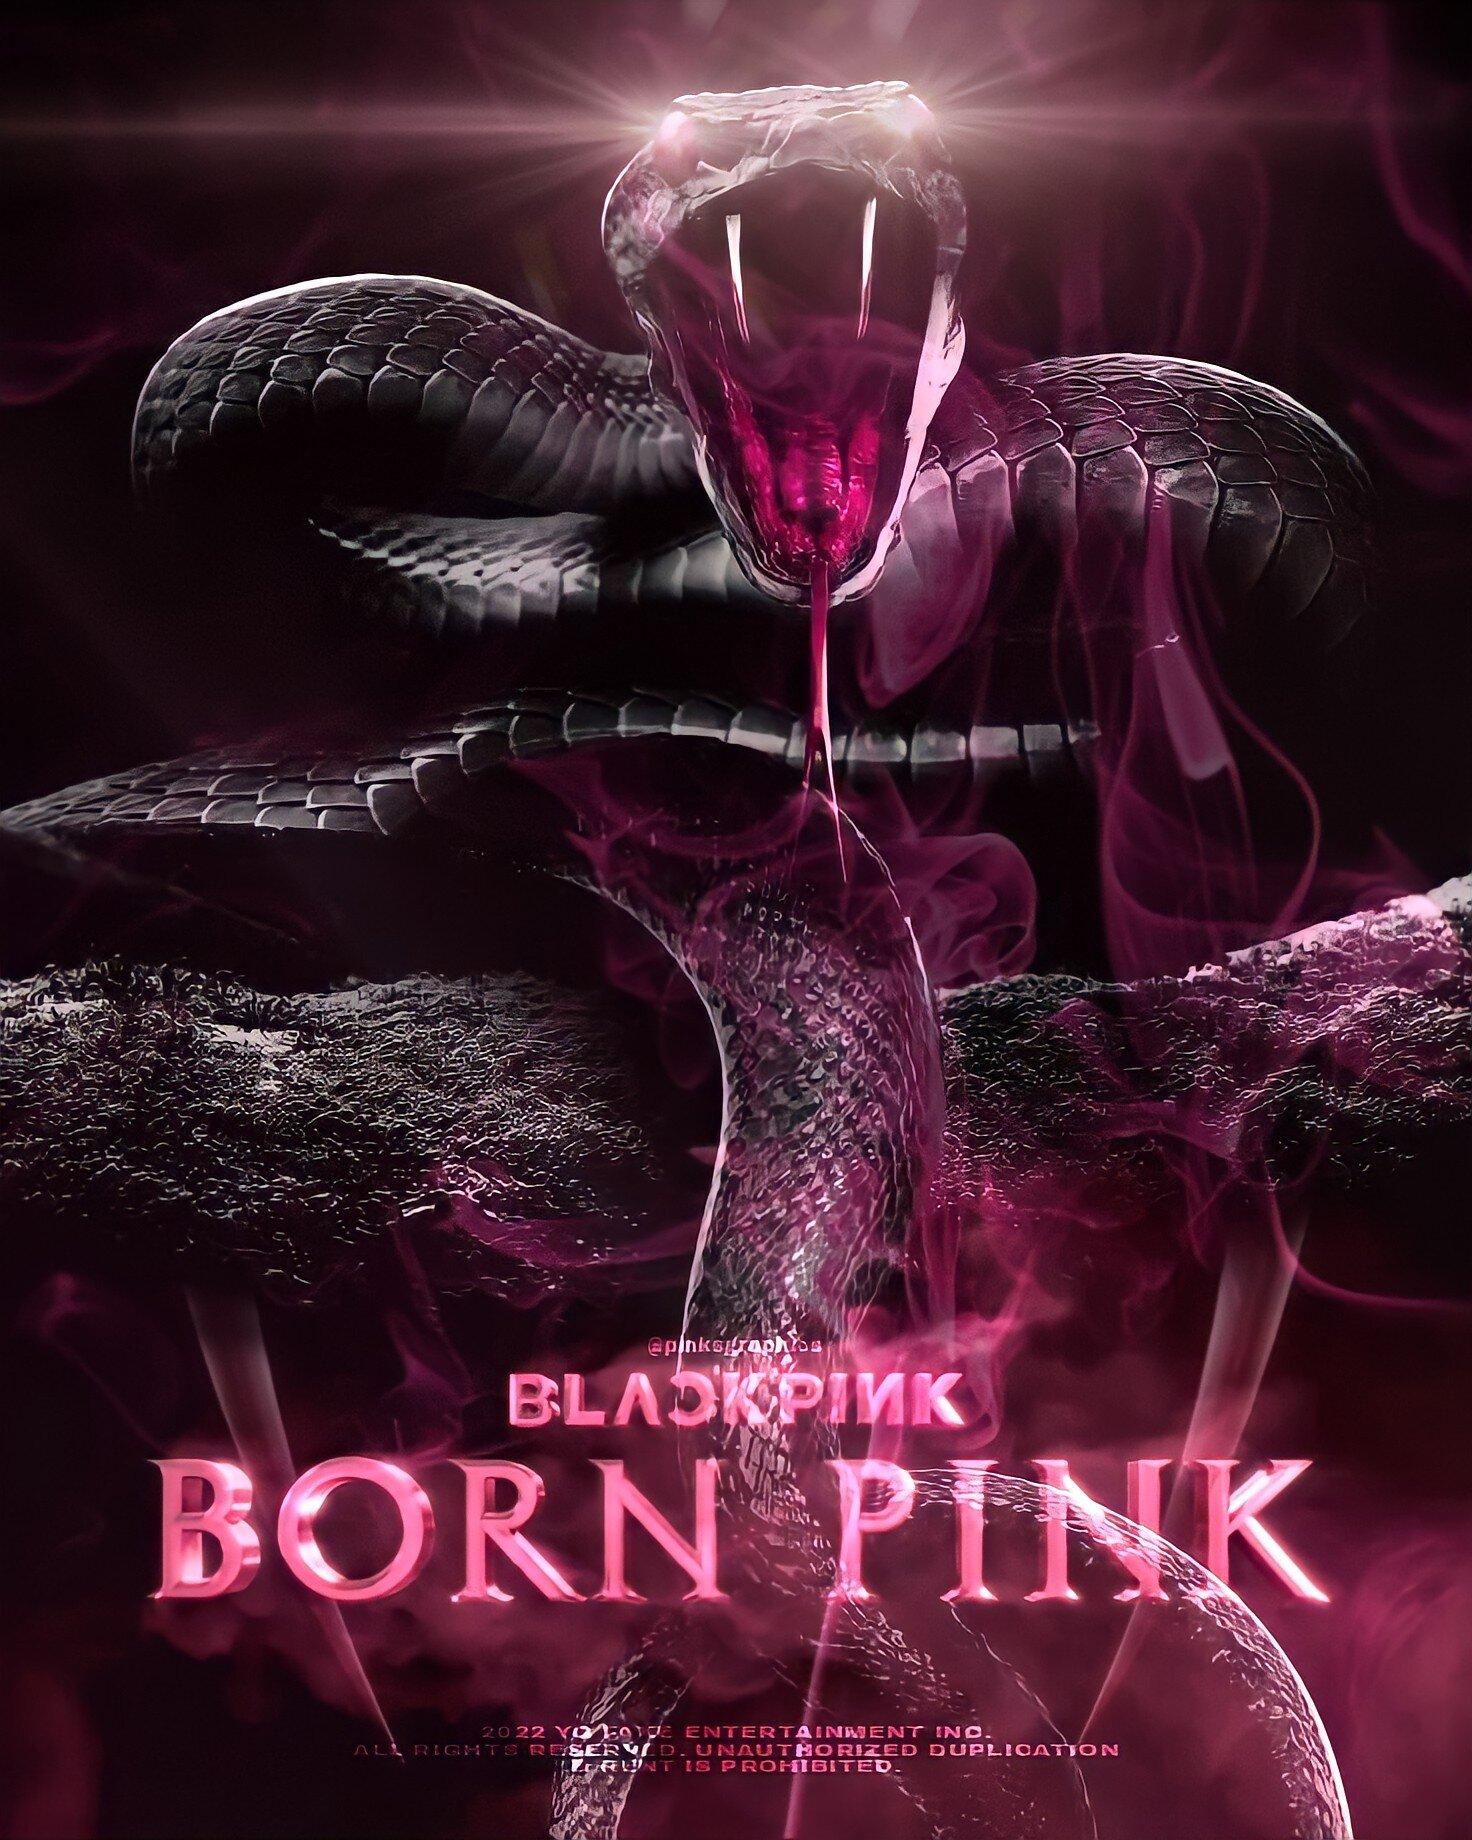 tai mien phi album born pink blackpink band